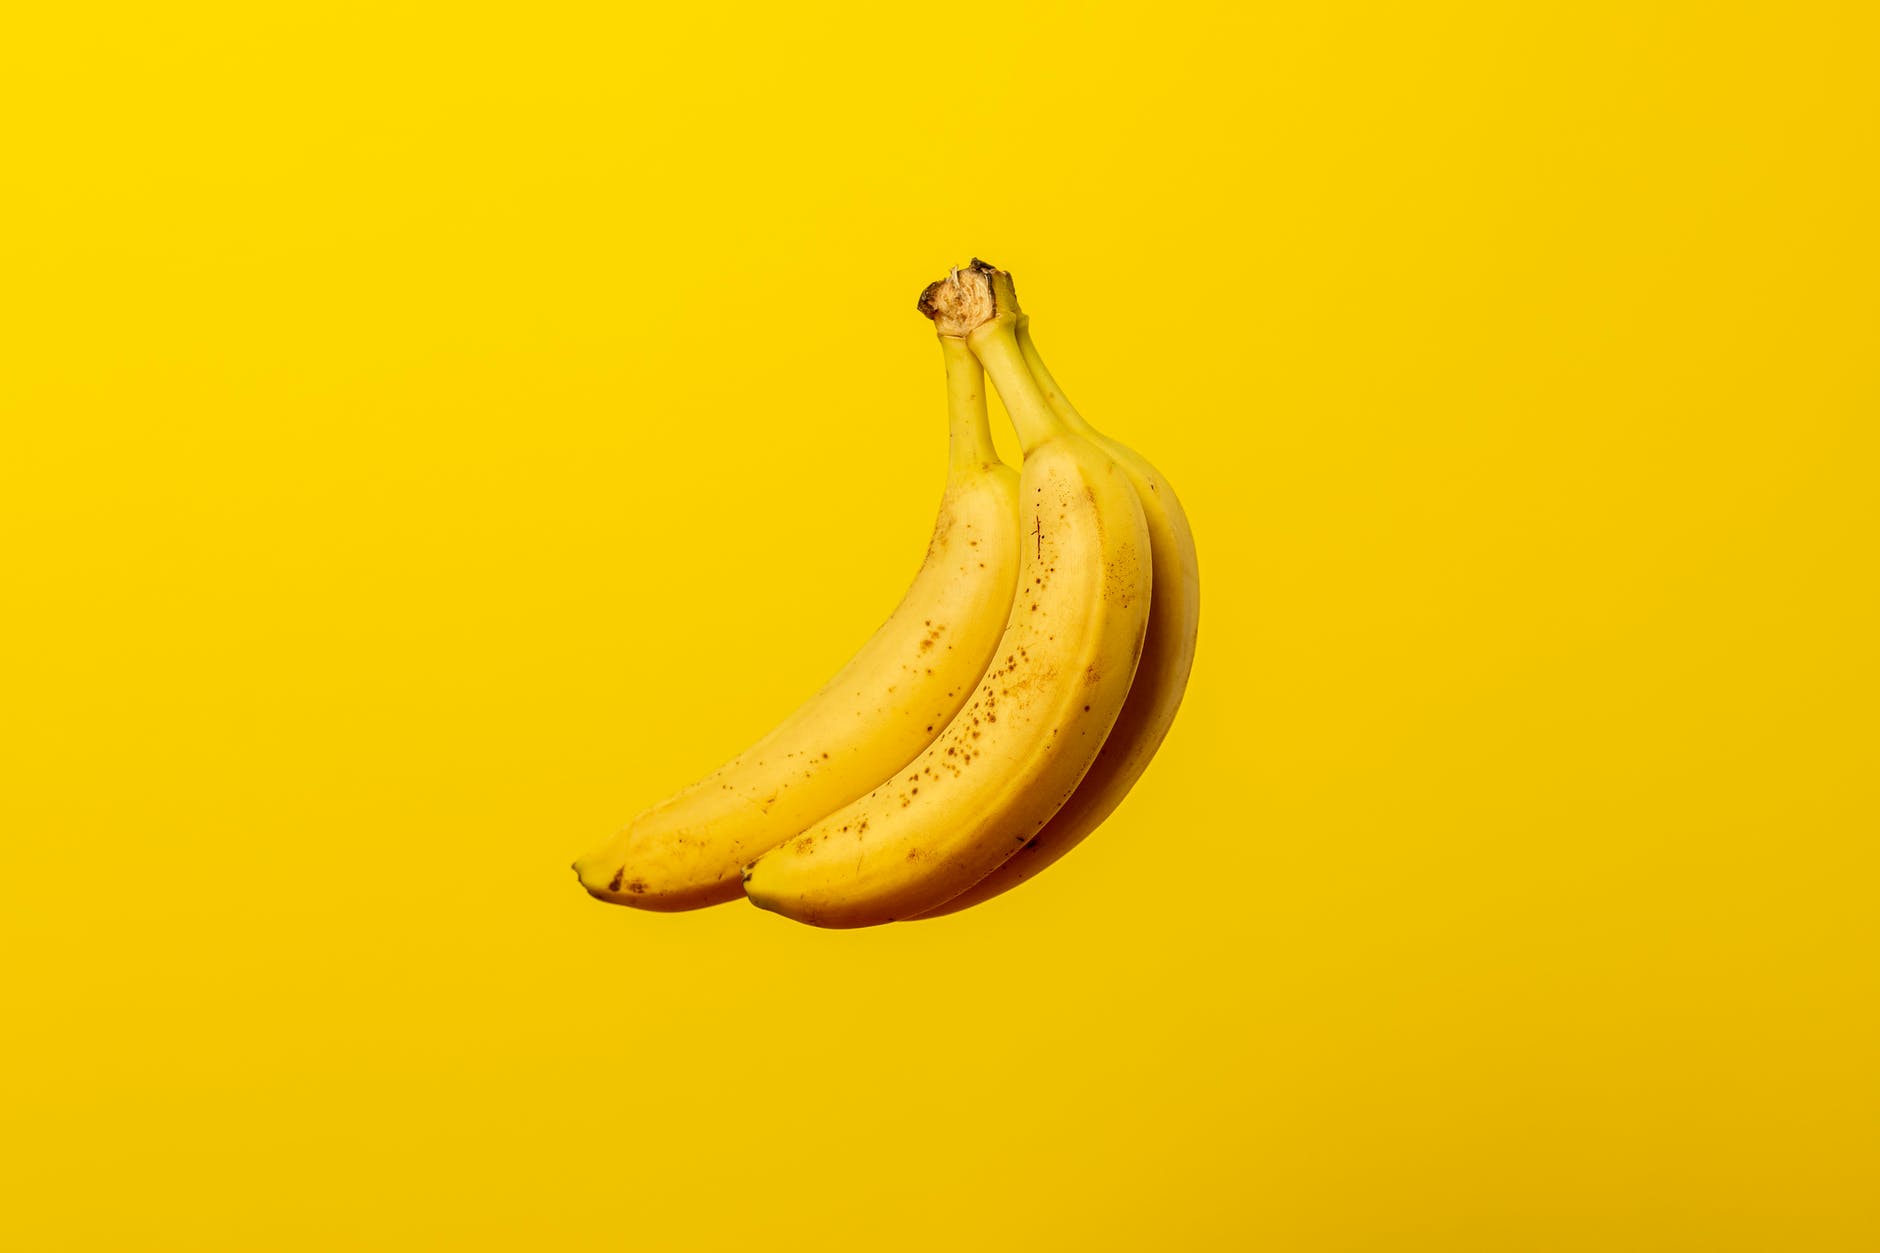 copy space photo of yellow bananas